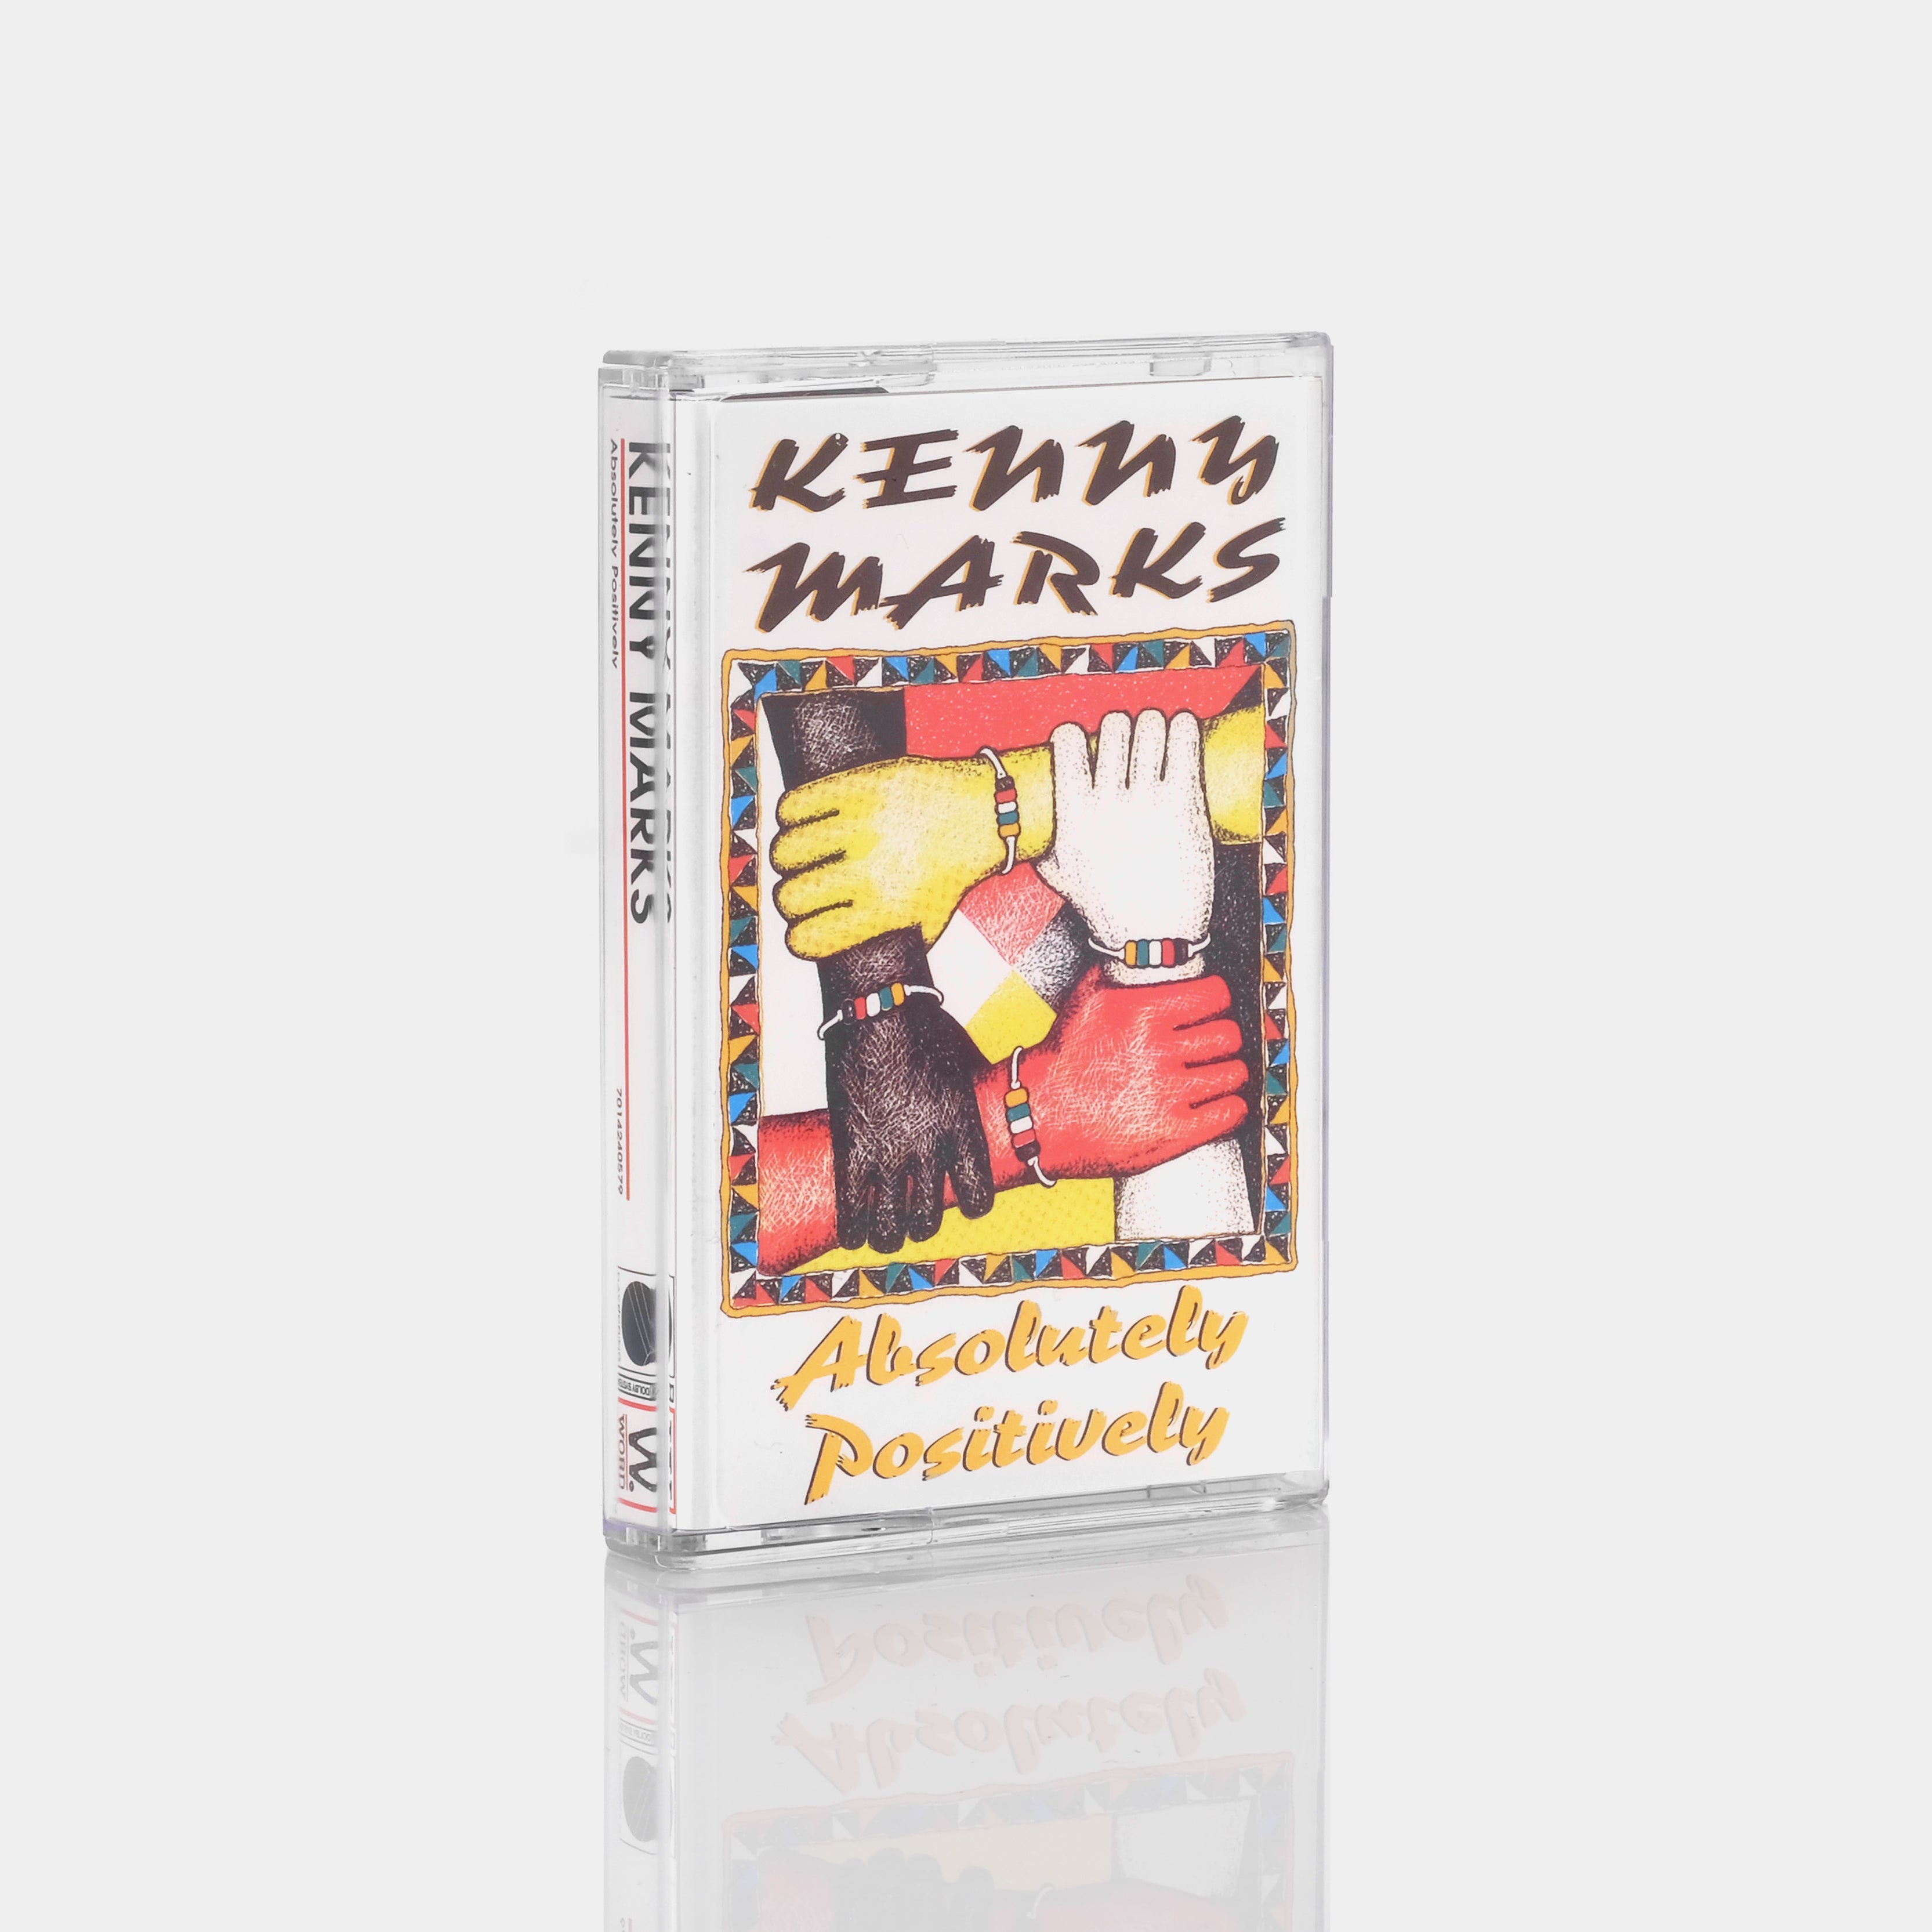 Kenny Marks - Absolutely Positively Cassette Tape